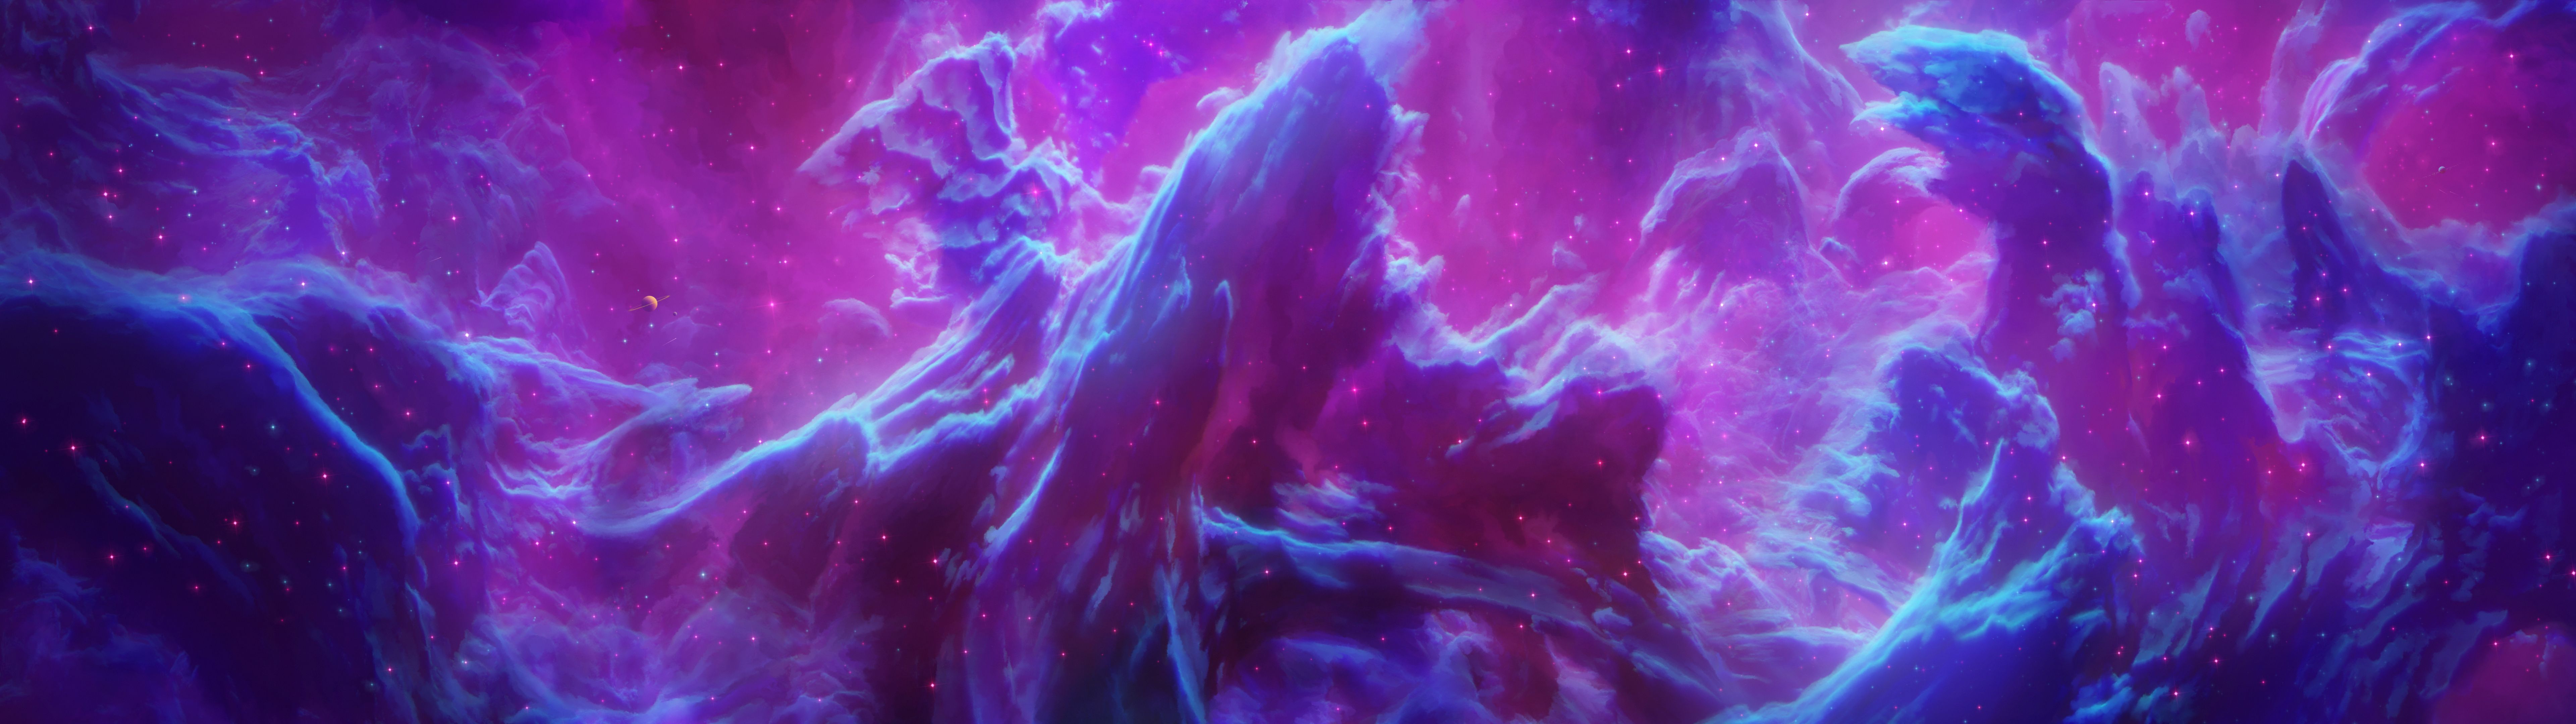 Purple Space Stars 8k, HD Digital Universe, 4k Wallpaper, Image